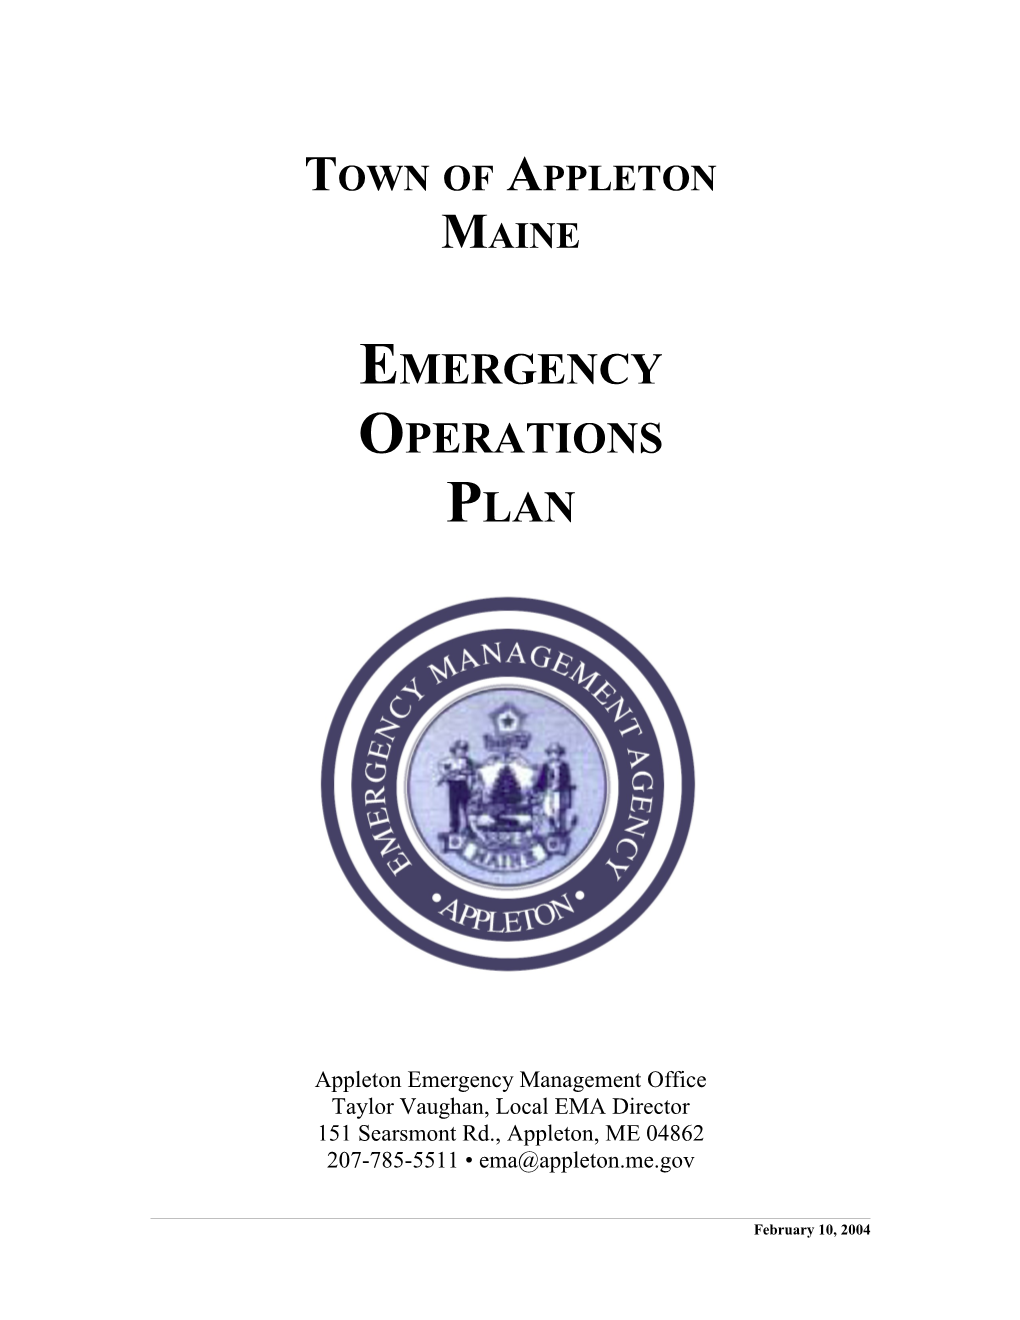 Appleton, Maine: Emergency Operations Plan